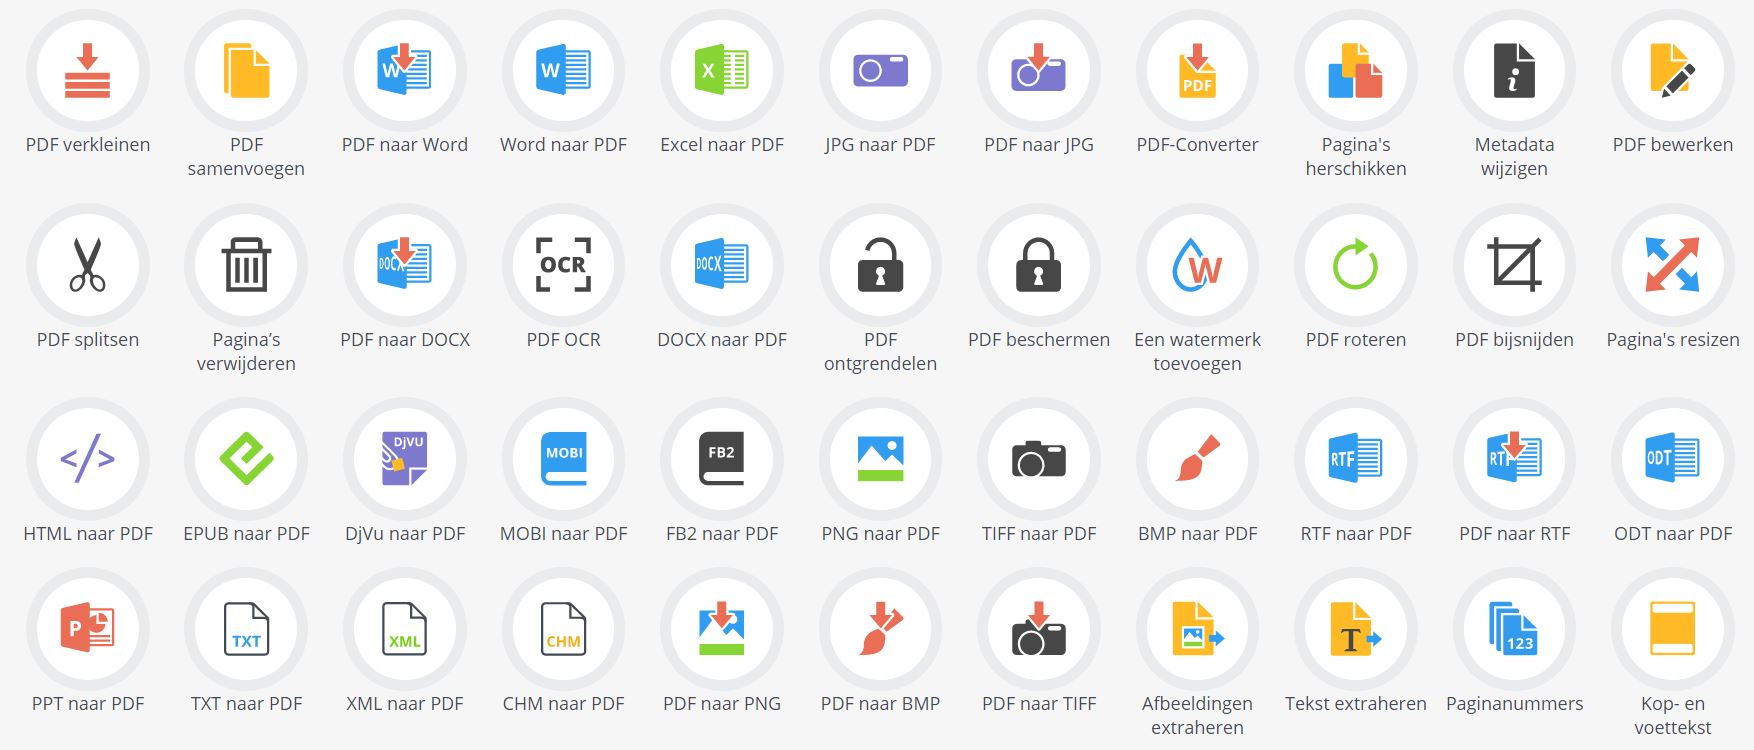 PDF candy, een van de design-tools.